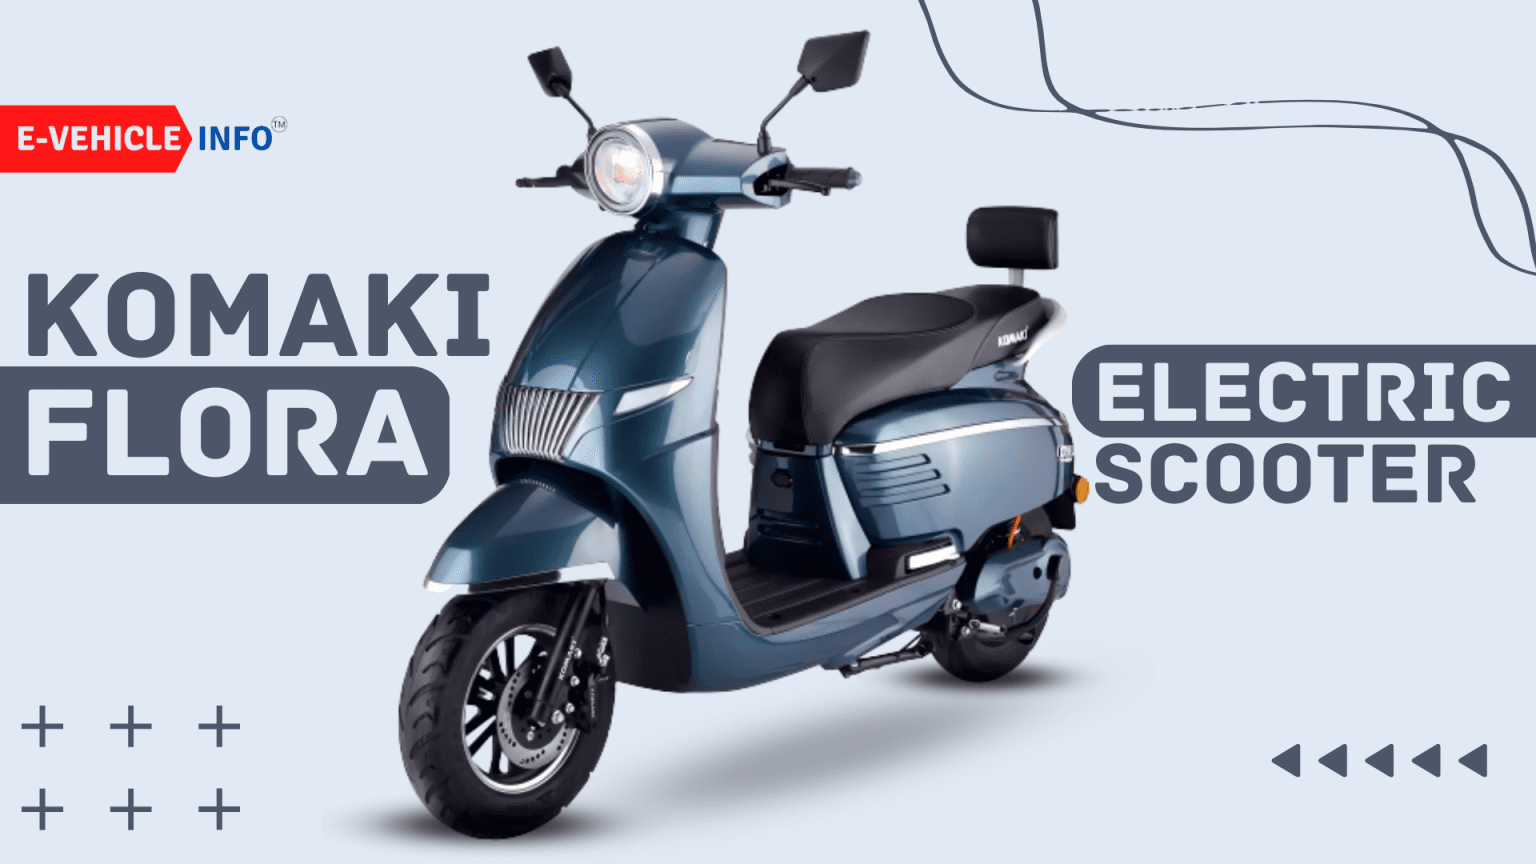 Komaki Flora Electric Scooter Price, Range & Specifications